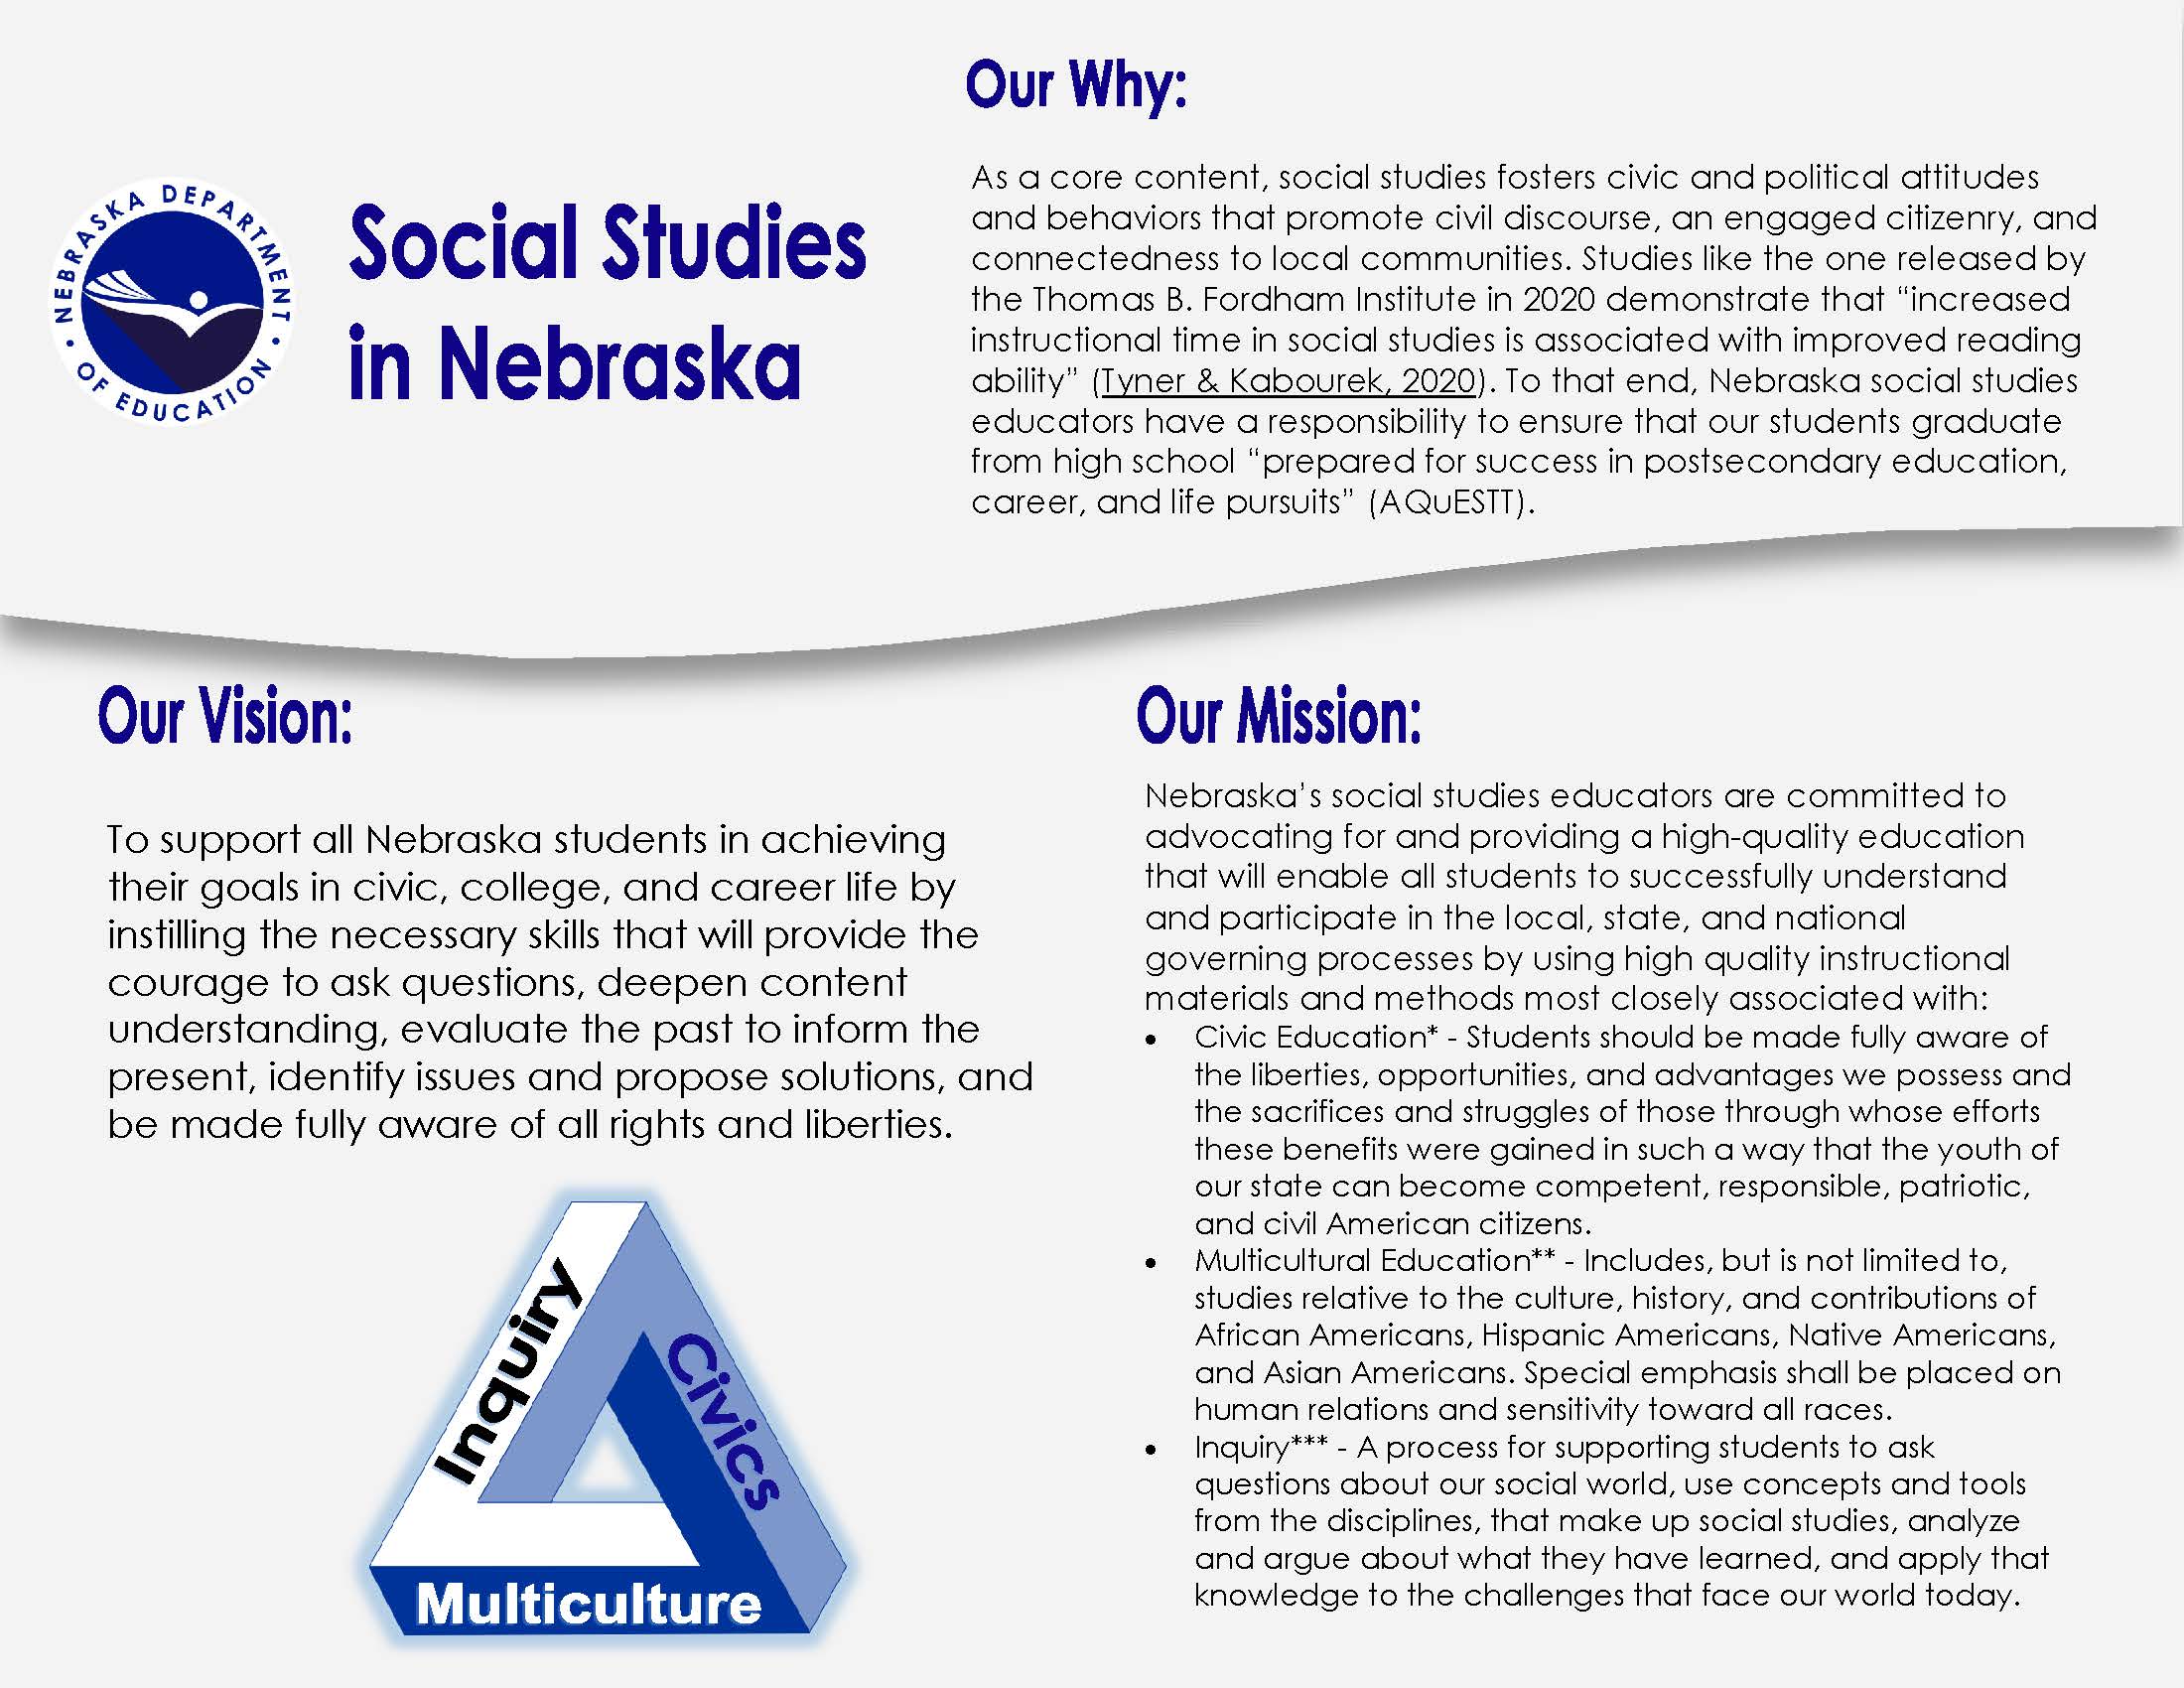 Description of the Nebraska Social Studies Vision and Mission Statement